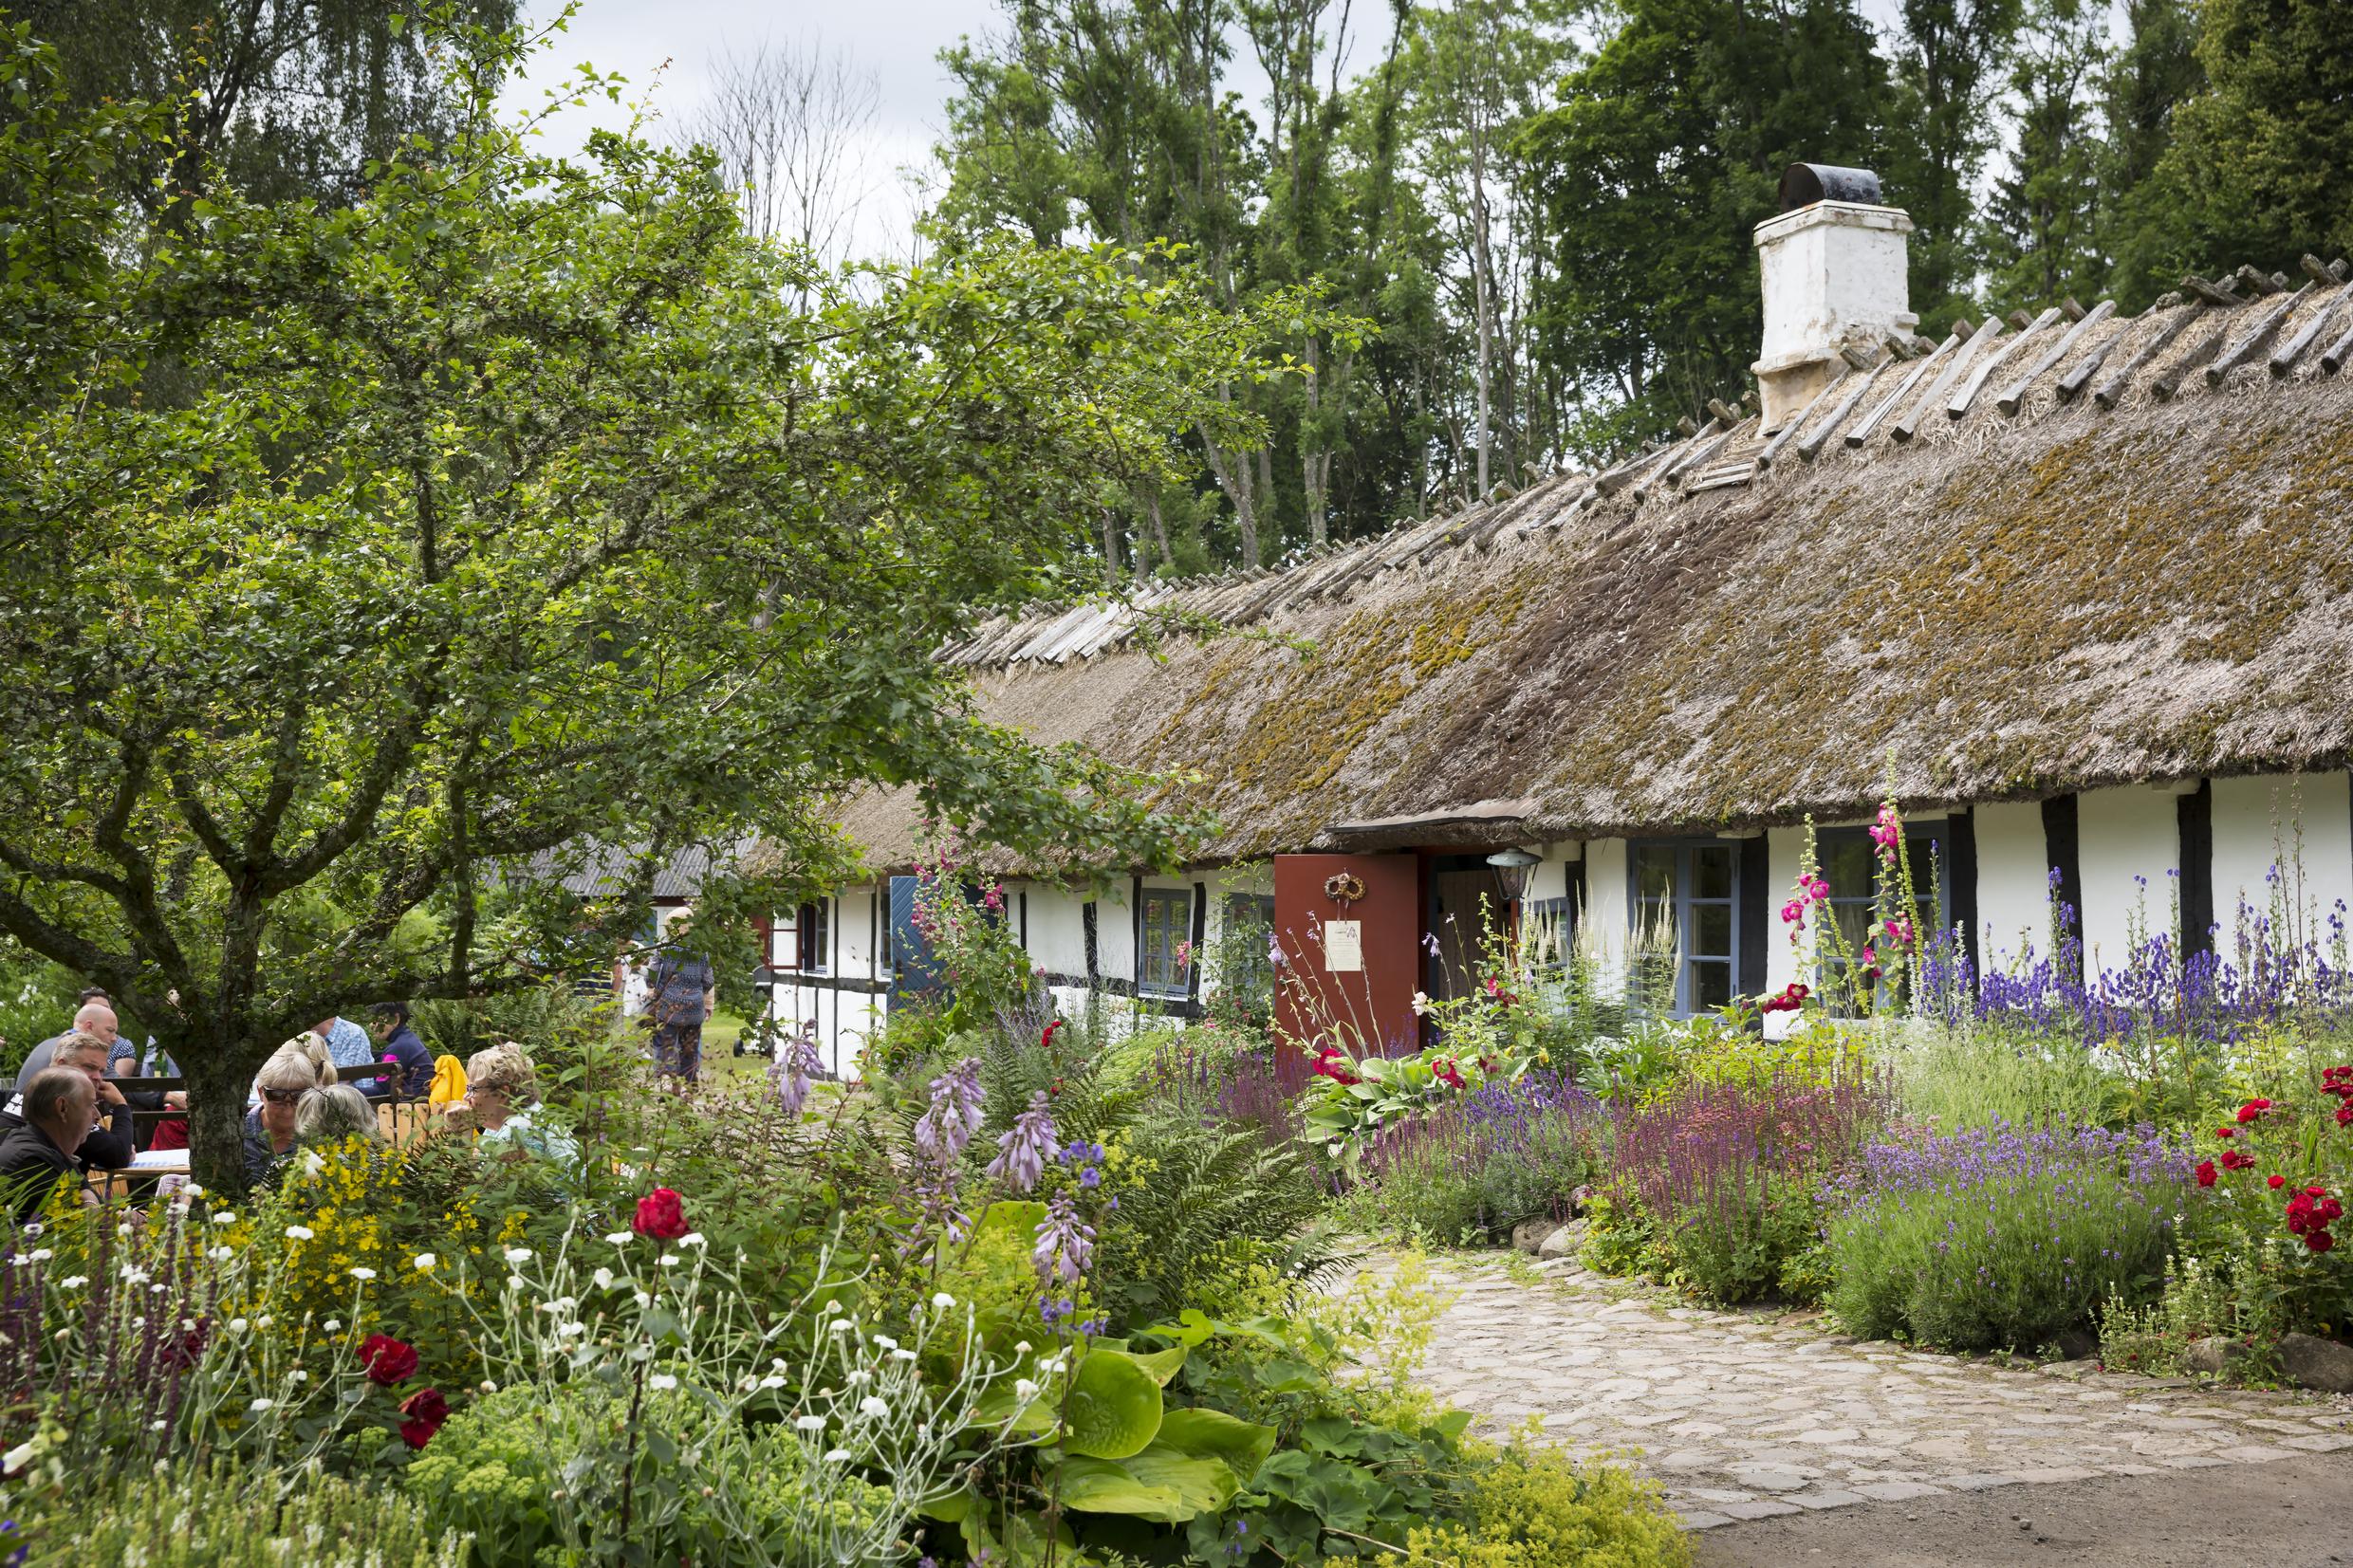 Heritage cottage in green garden surrounding